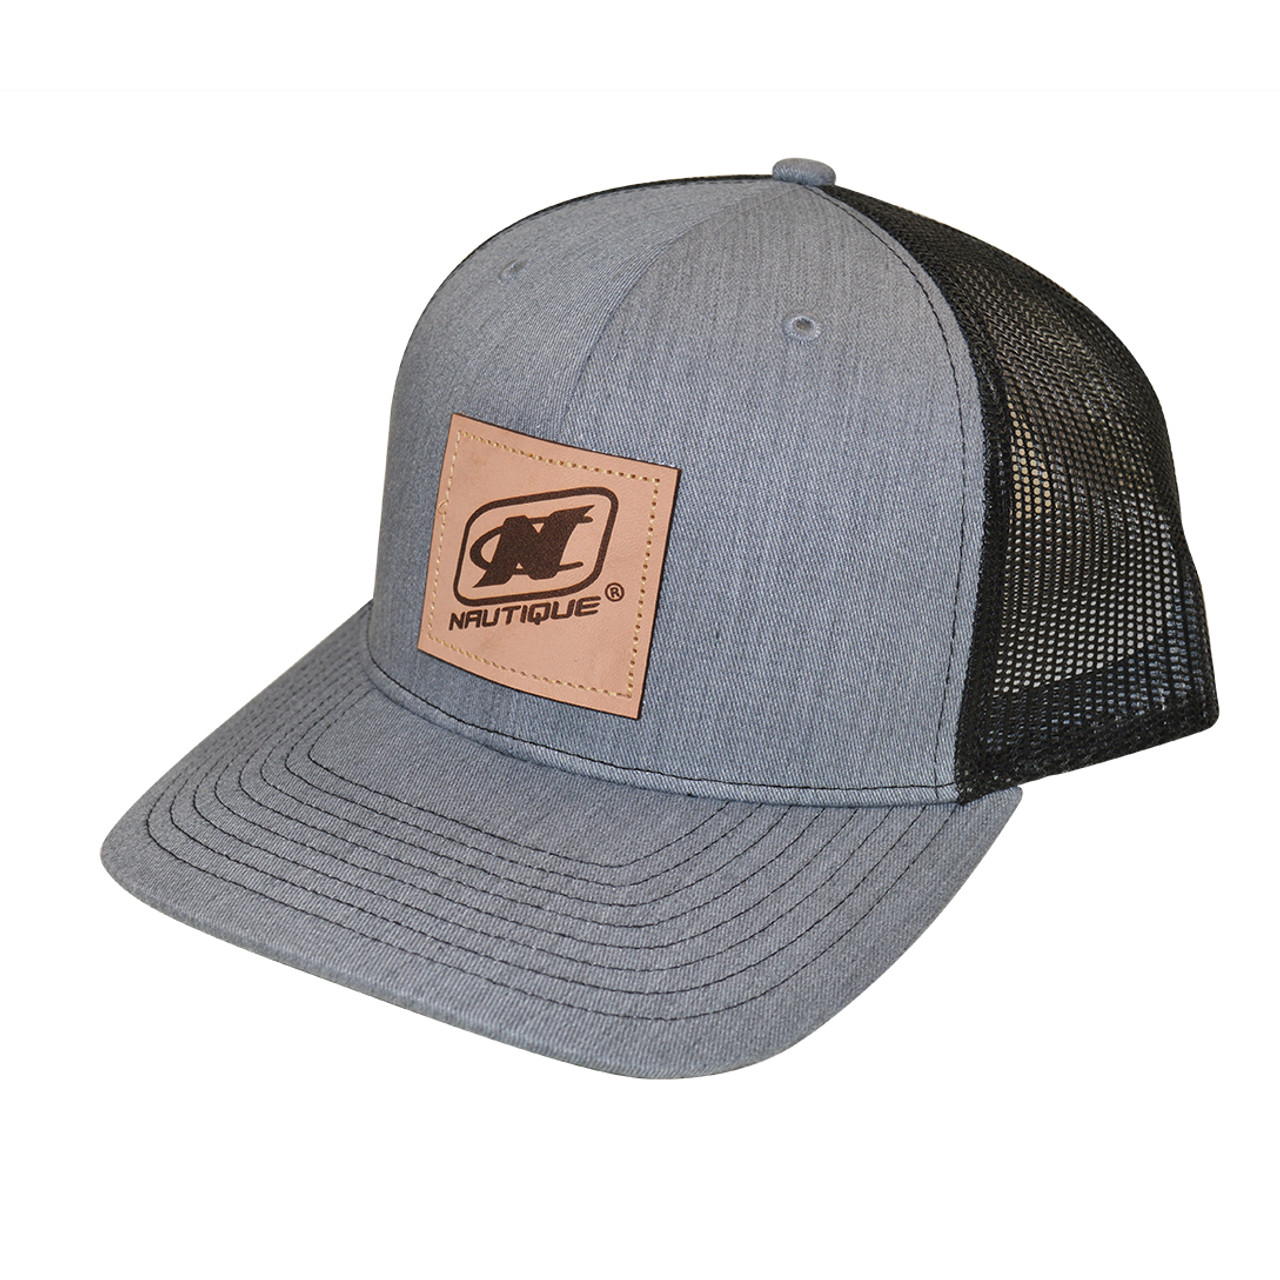 Nautique Trucker Hat w/ Leather Patch